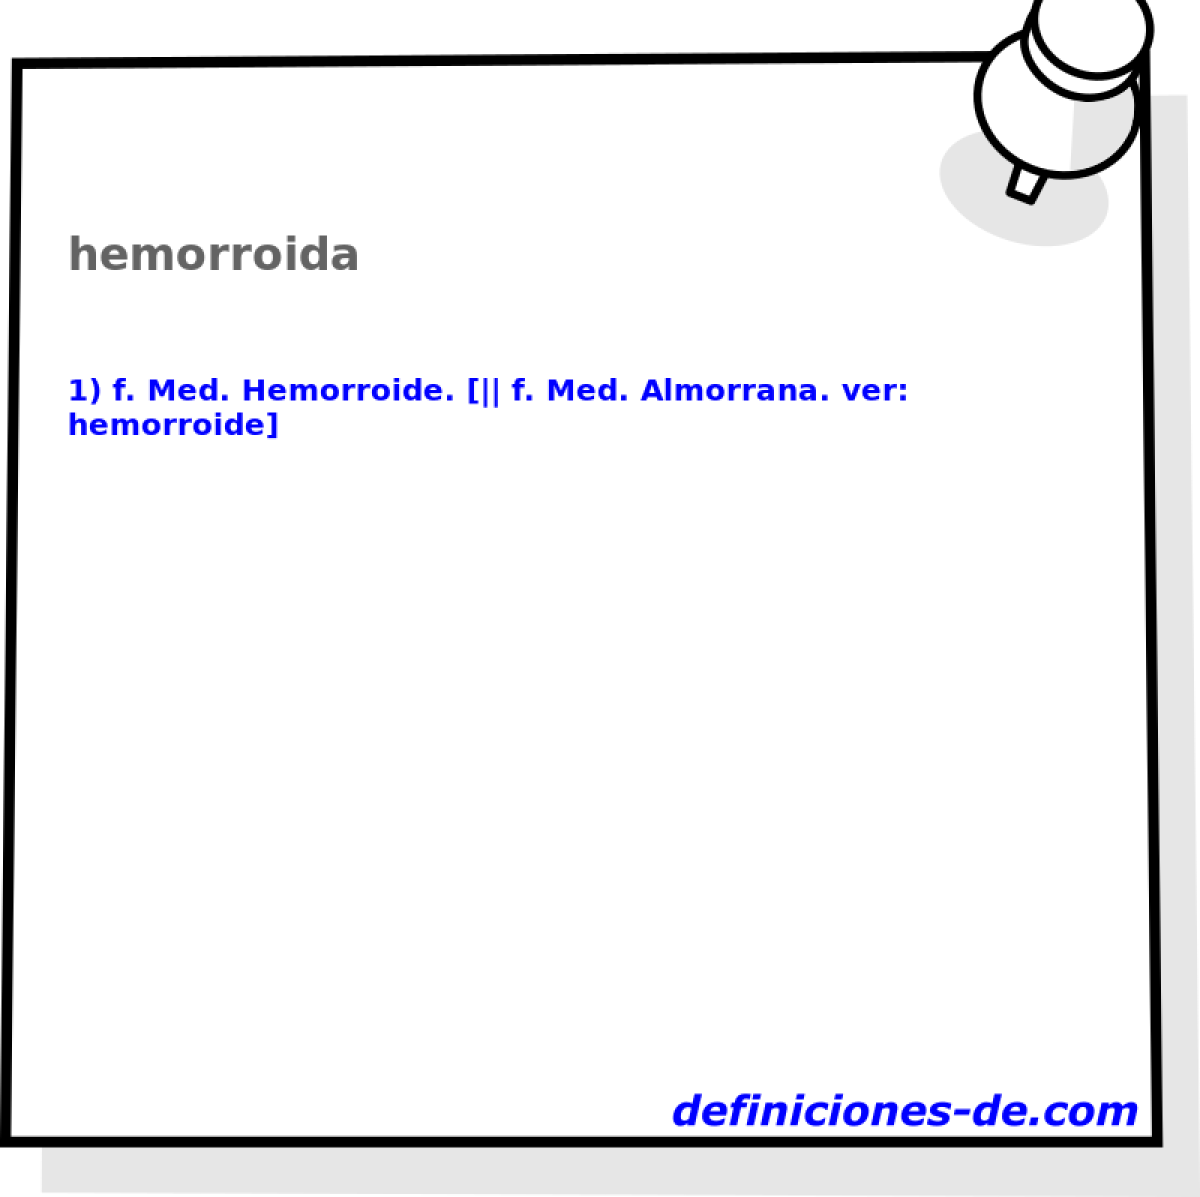 hemorroida 